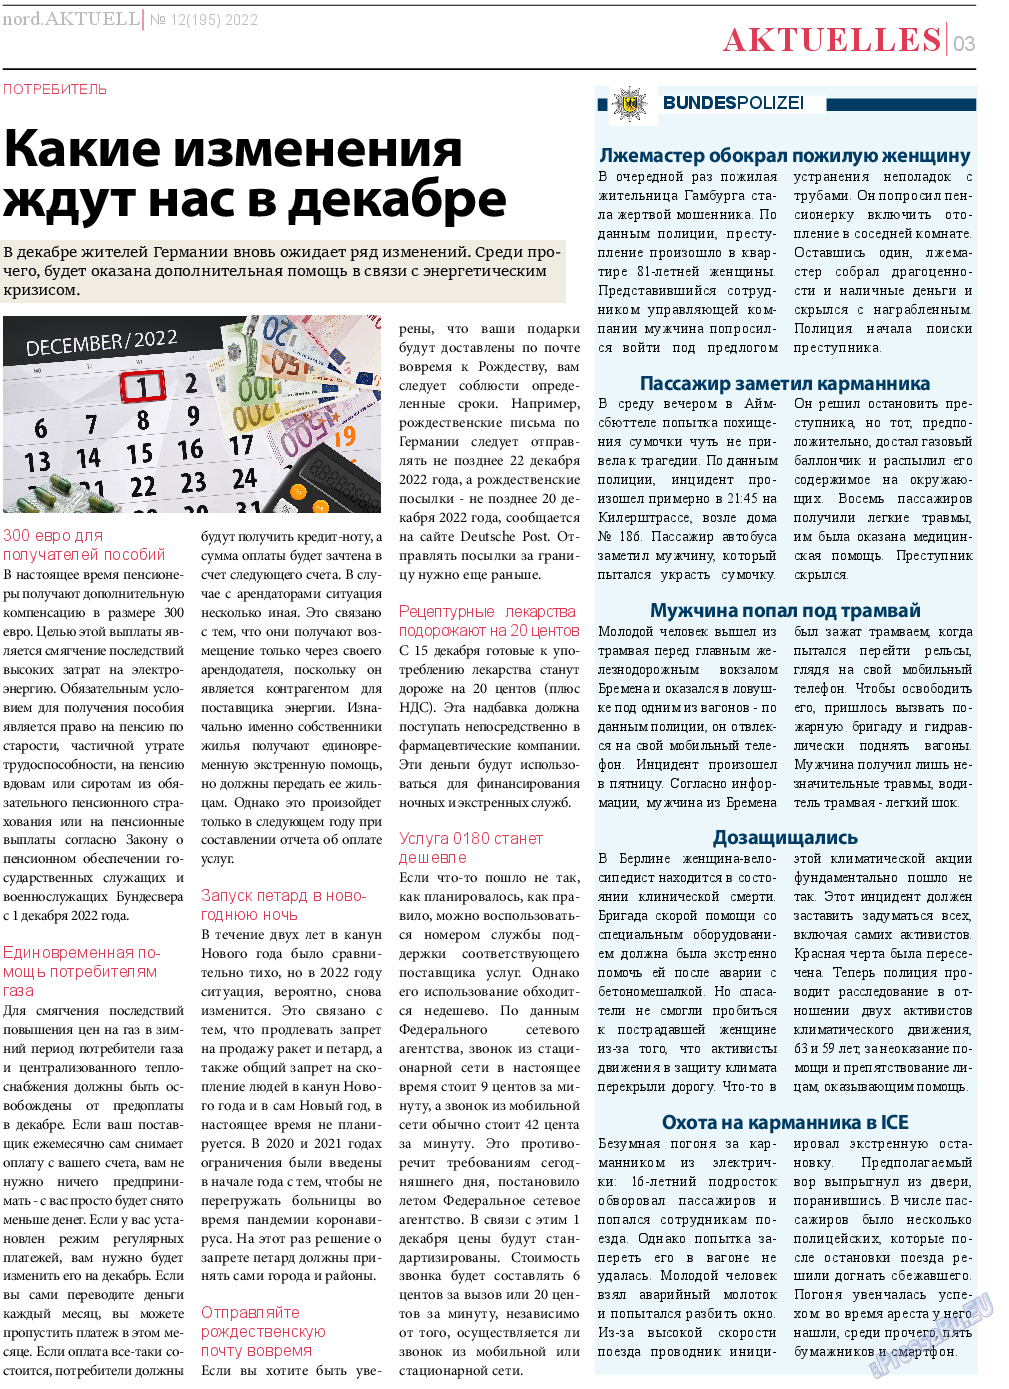 nord.Aktuell, газета. 2022 №12 стр.3